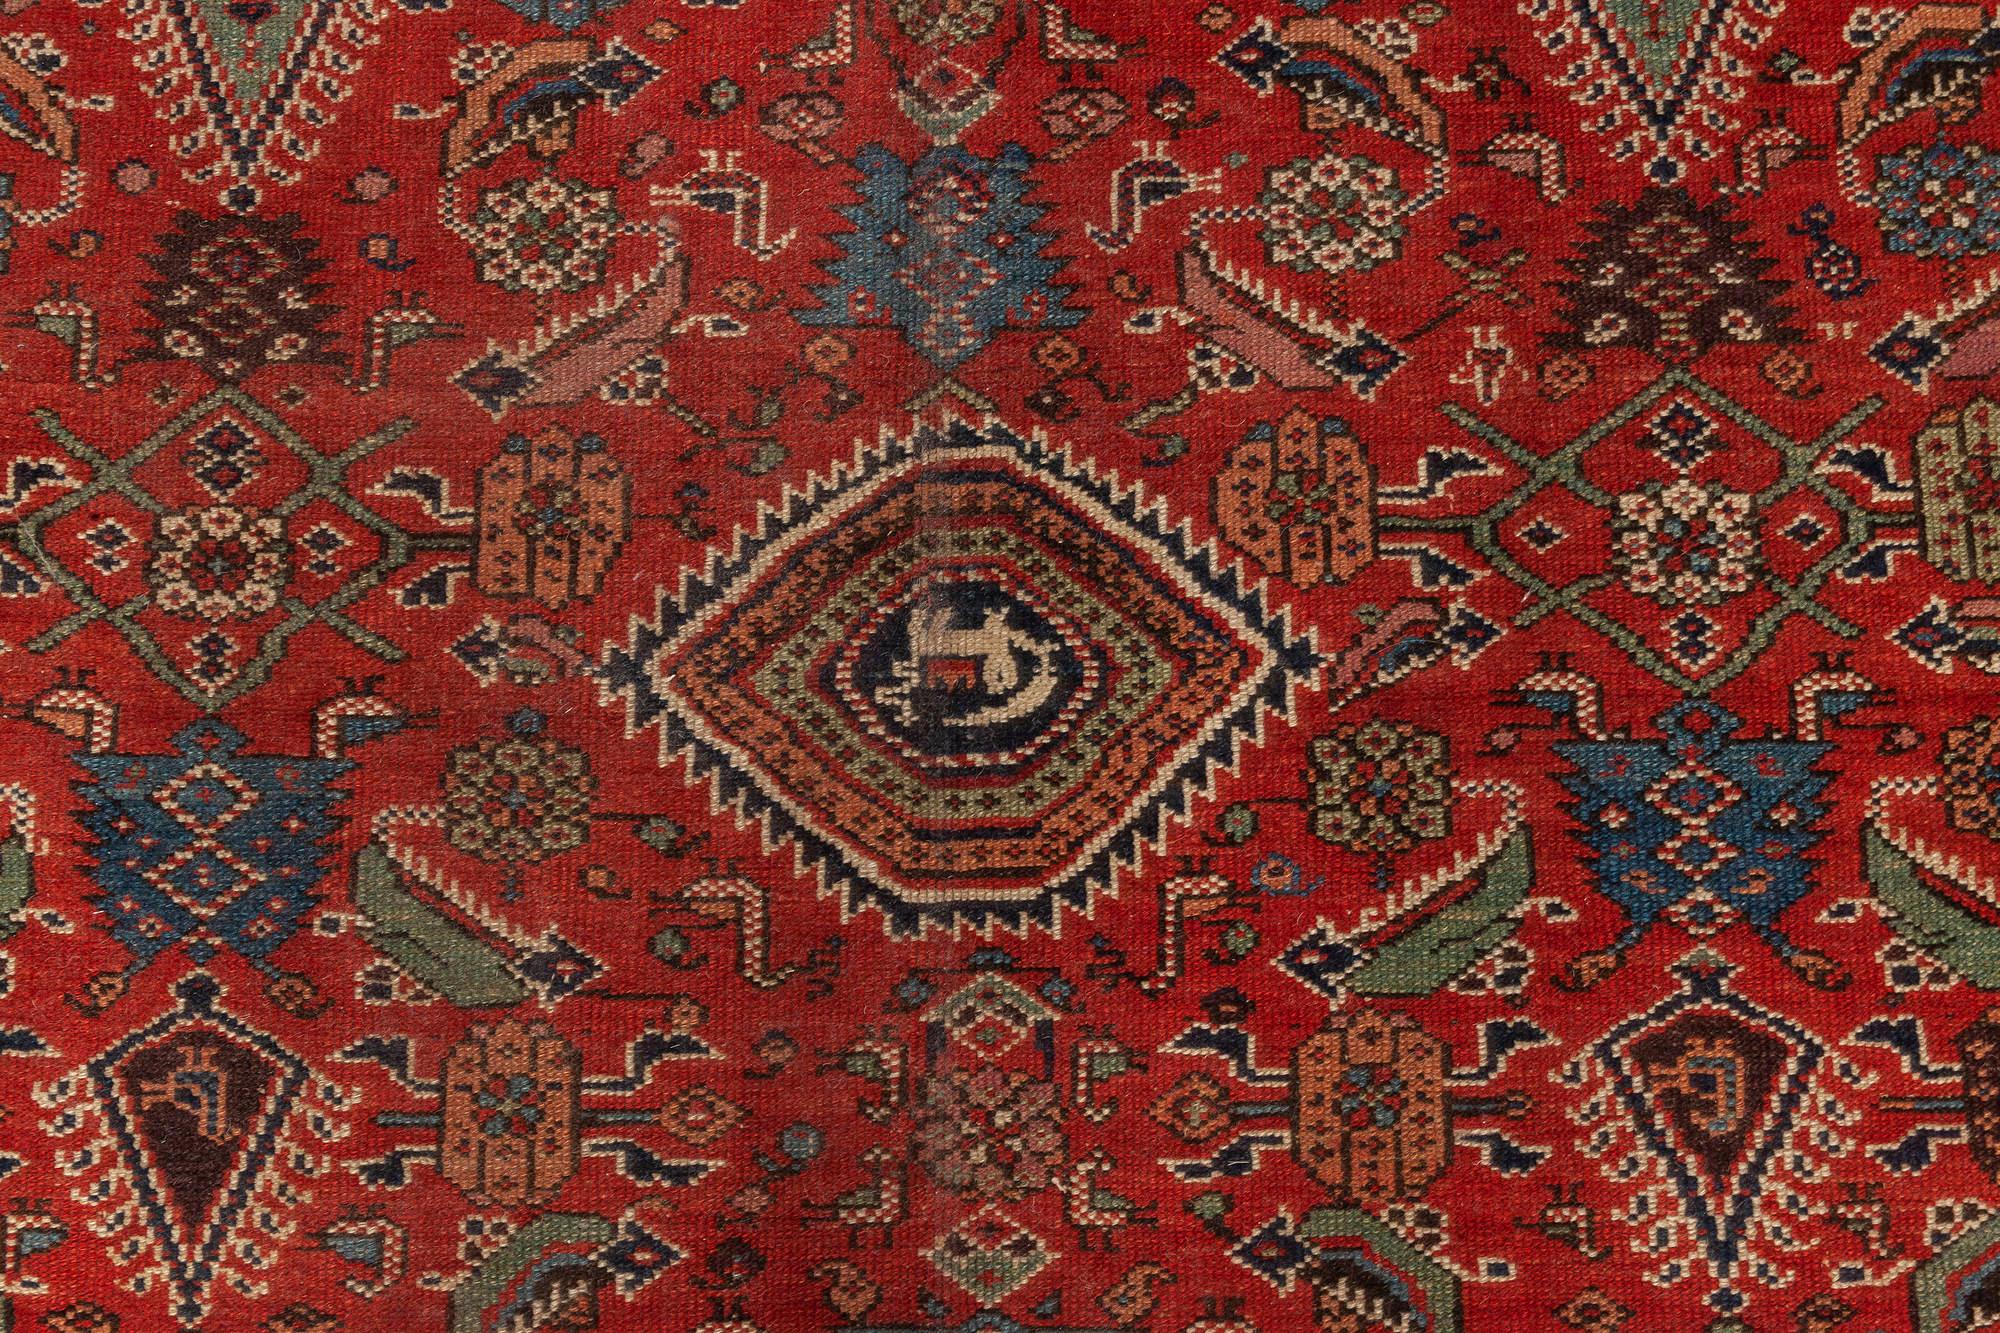 Early 20th century Persian Feraghan handmade wool rug
Size: 6'7